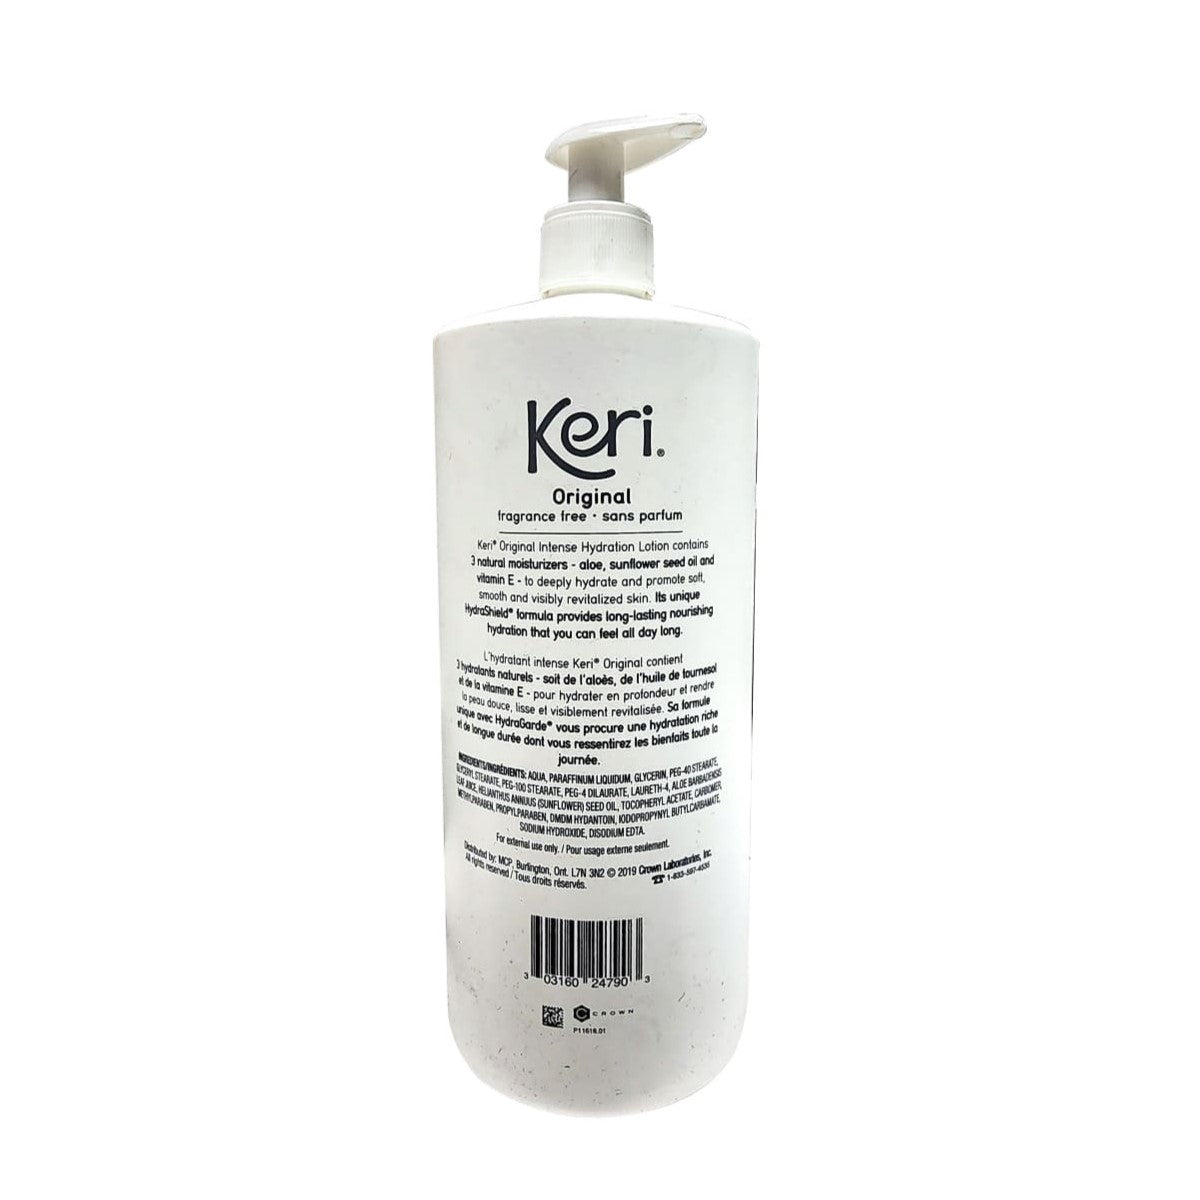 Description and ingredients for Keri Original Intense Hydration Fragrance Free (900 mL)